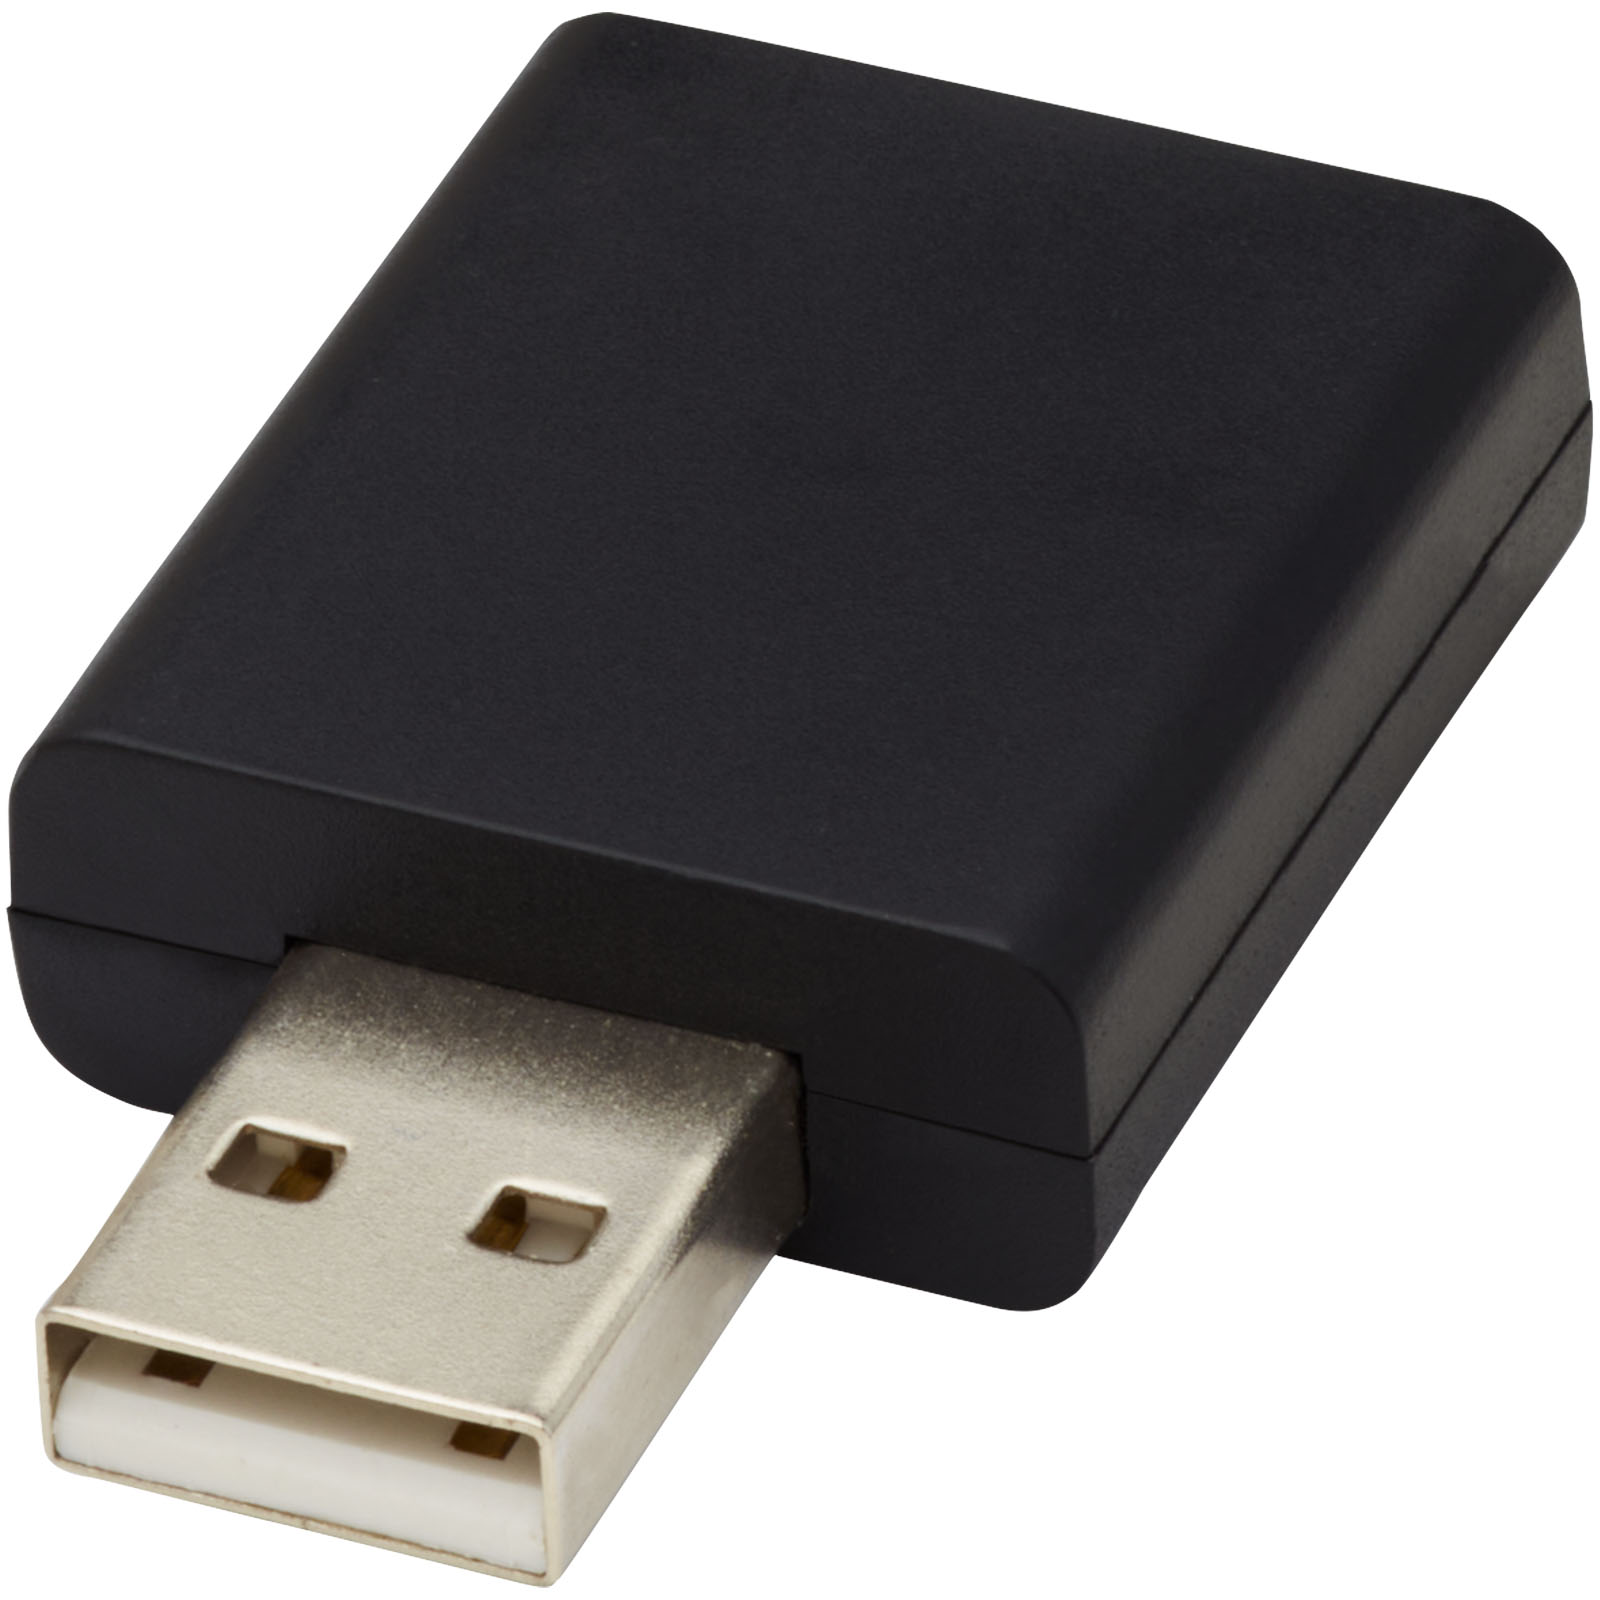 DataGuard USB - Søndersø